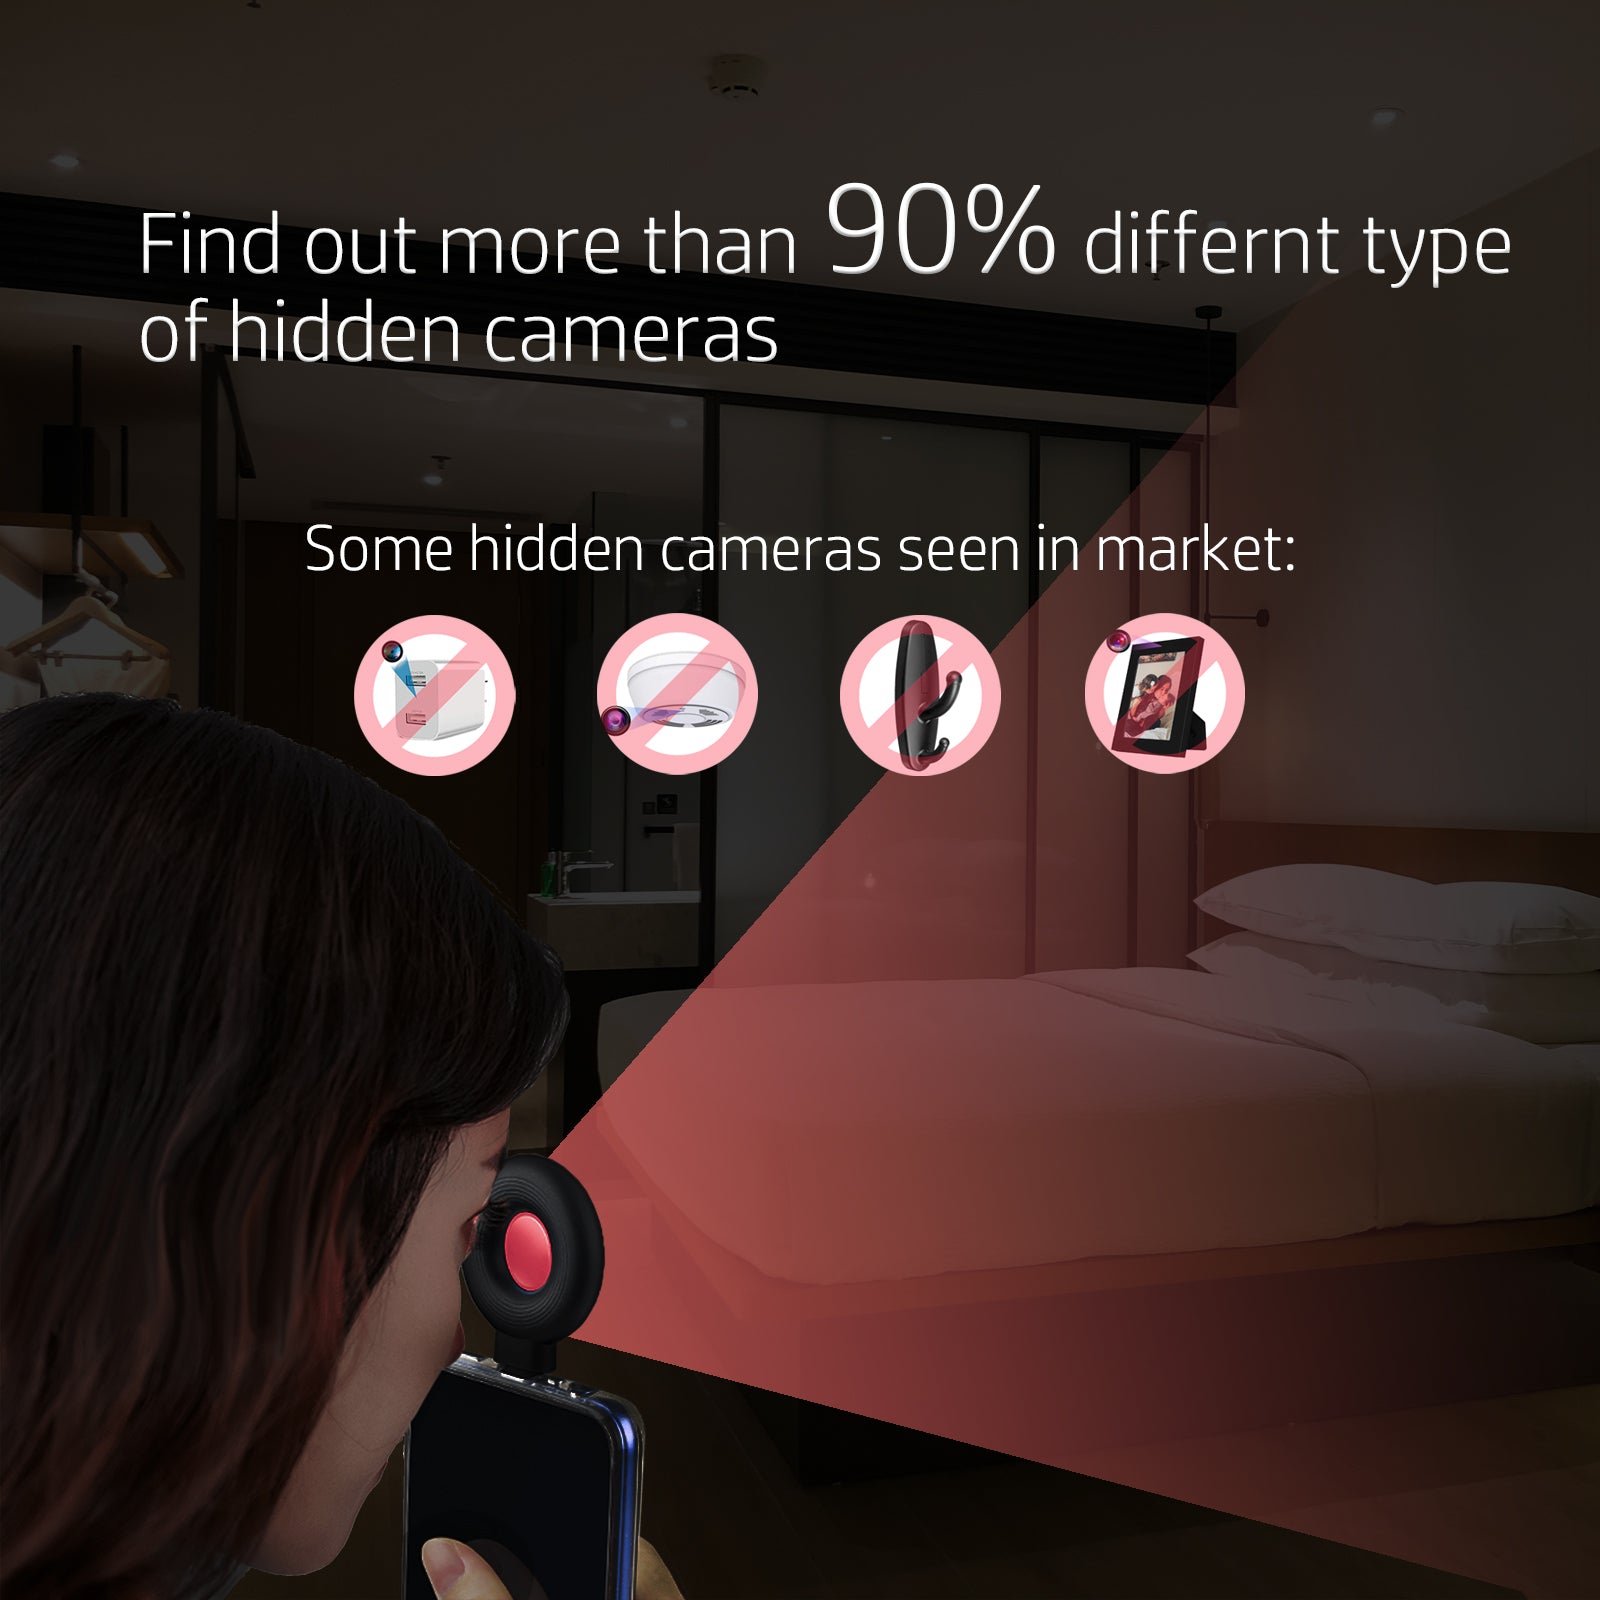 mini spy cameras for bathrooms